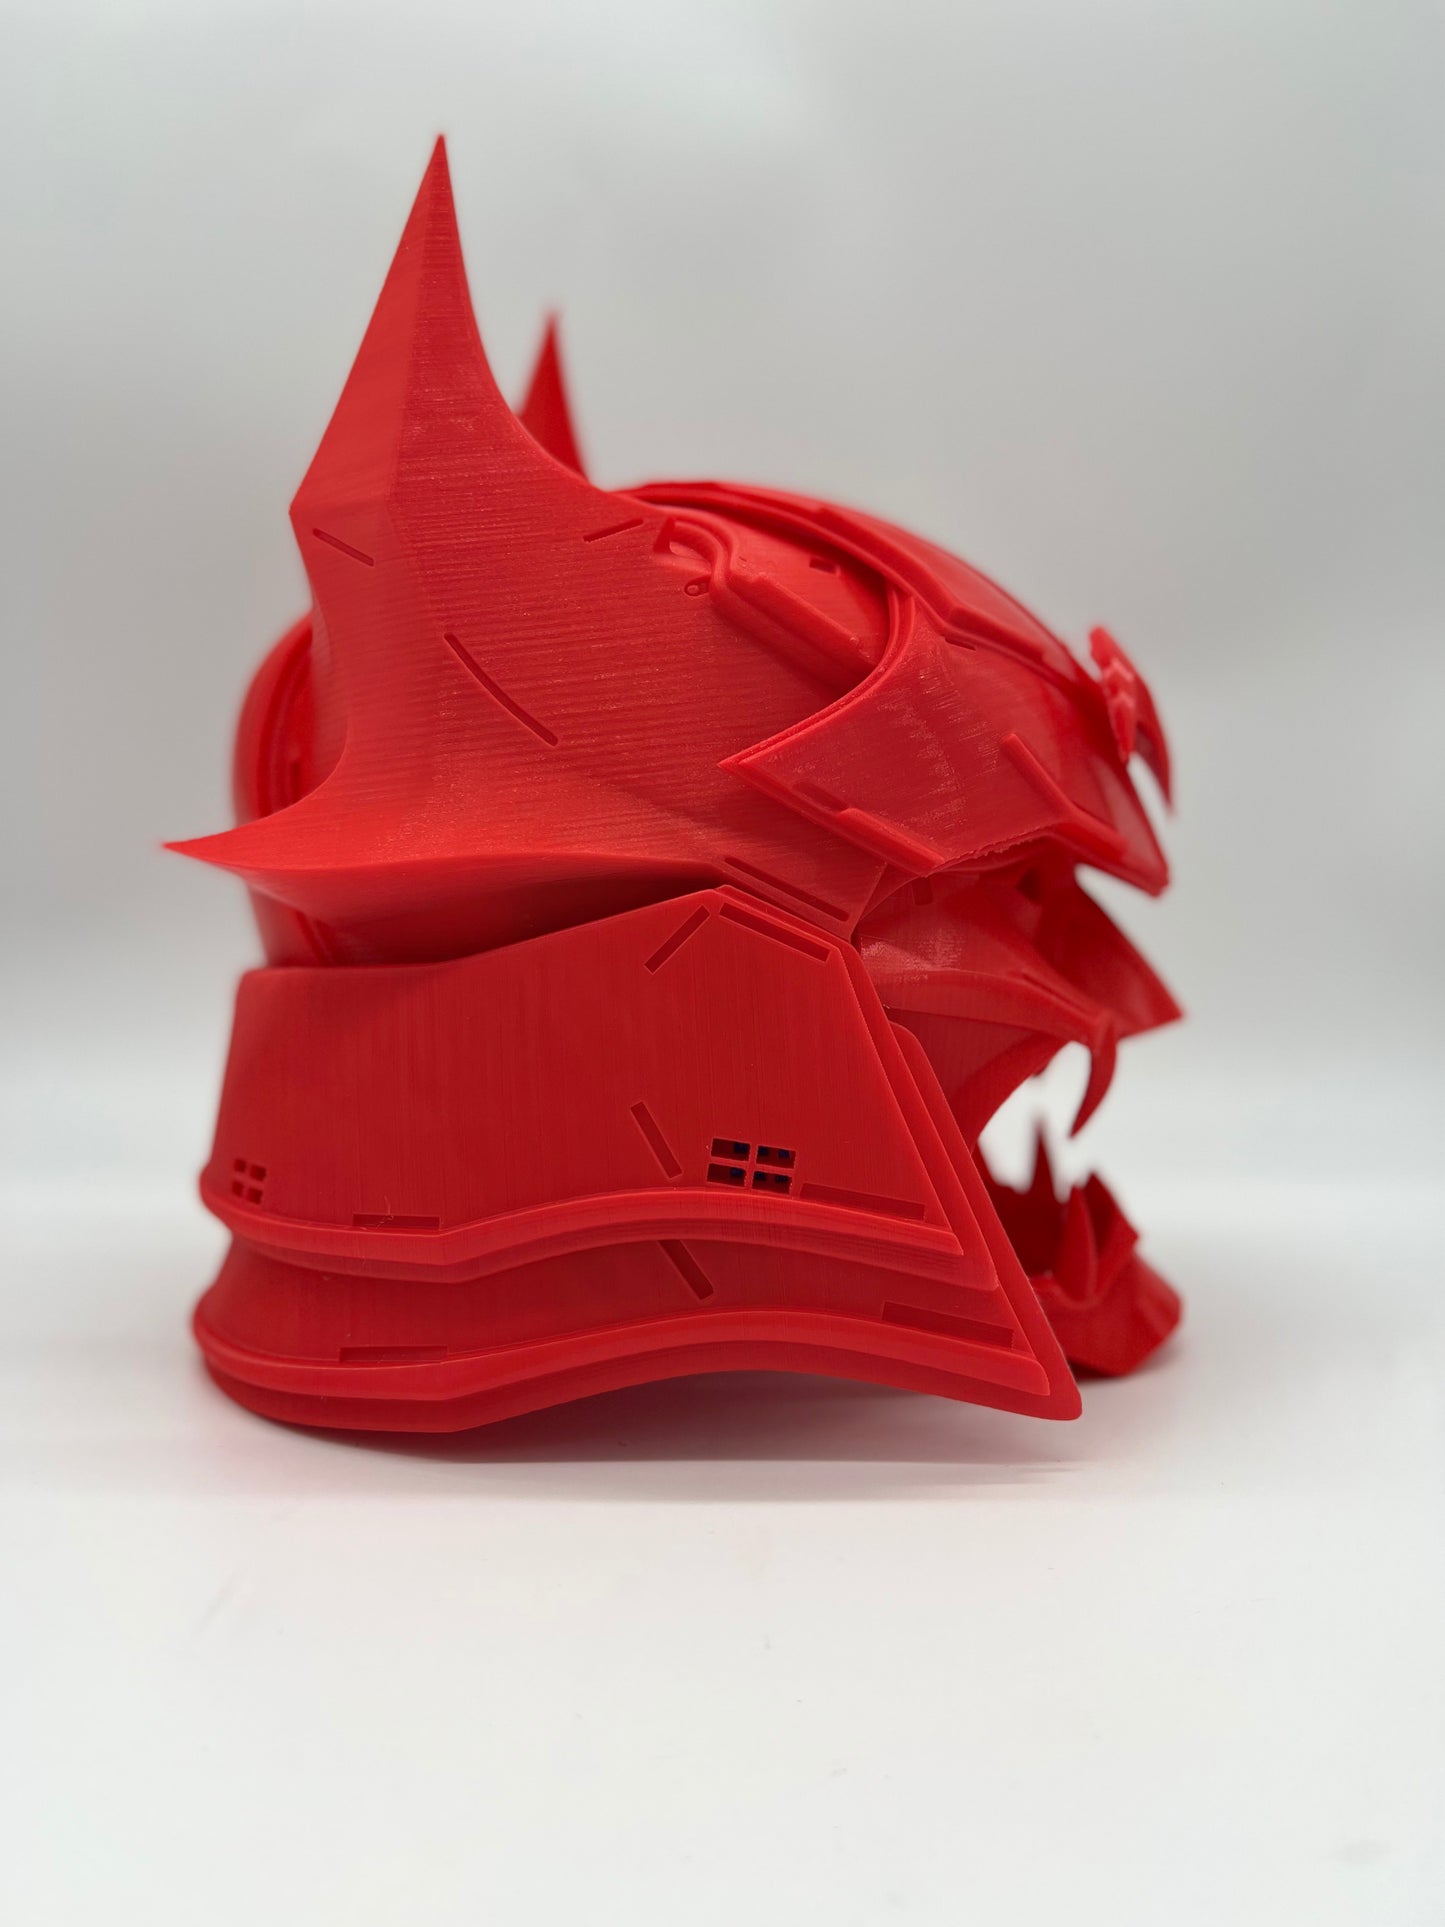 Shogun Batman Concept Cosplay Helmet